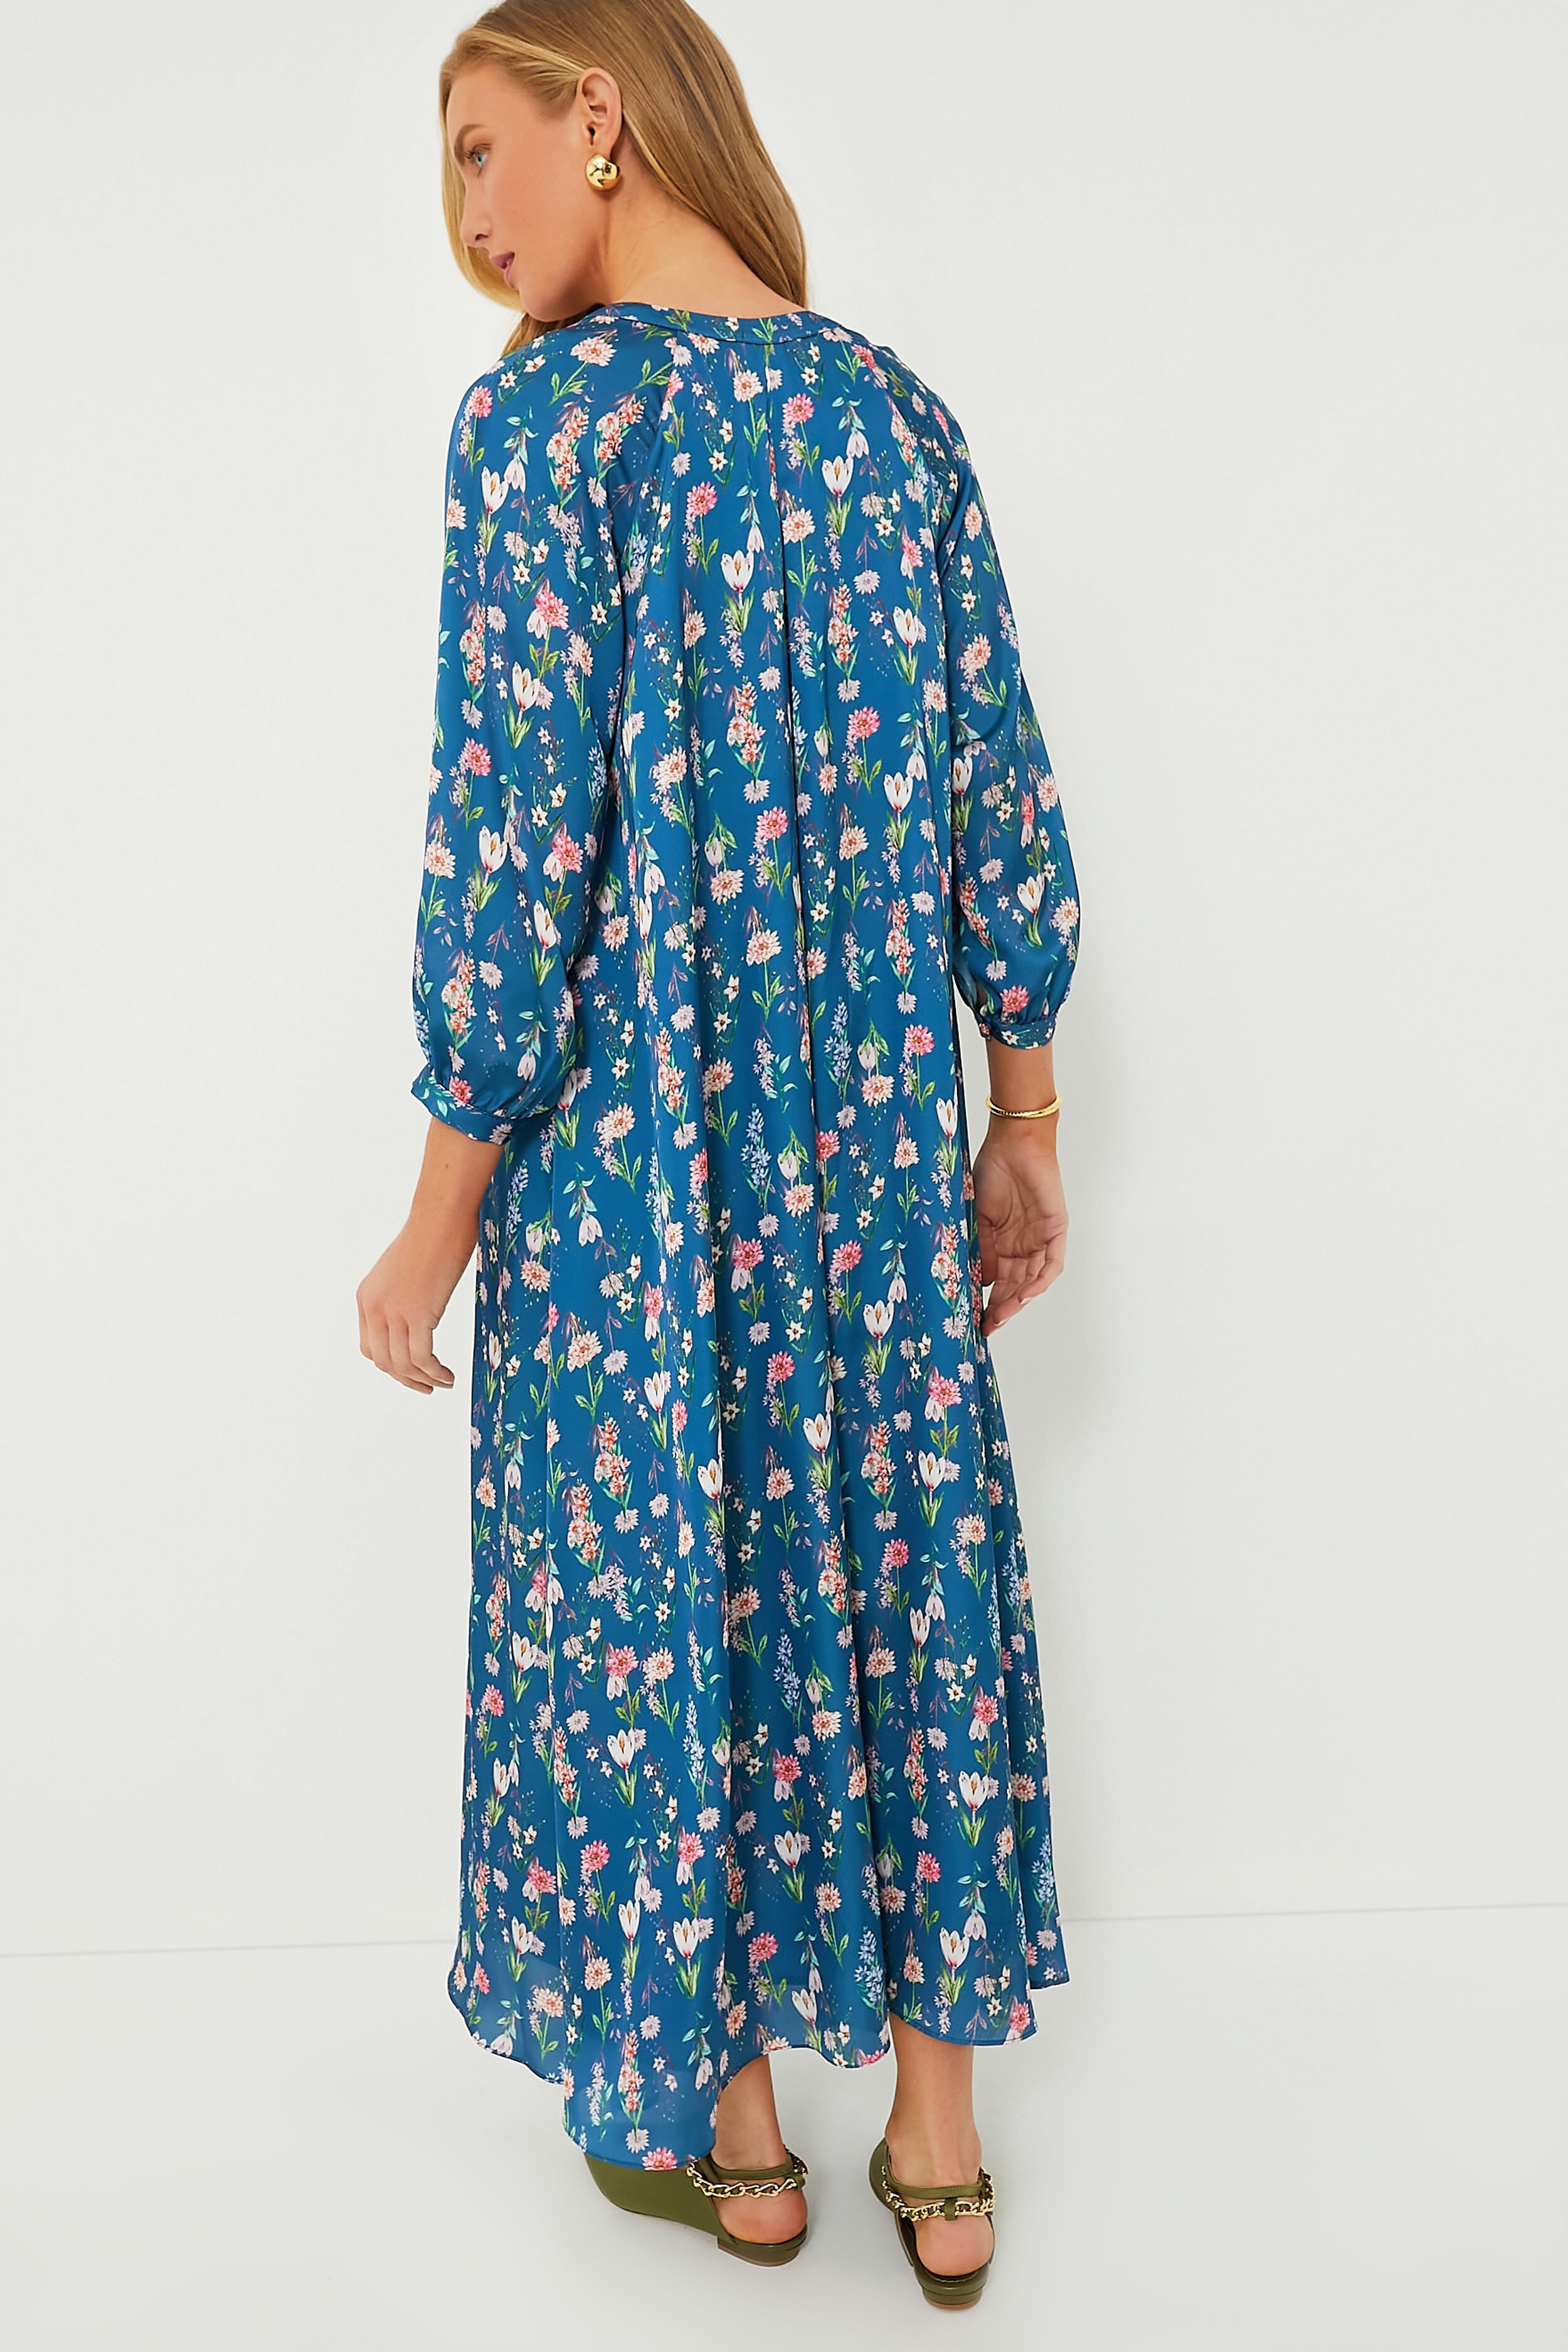 buttercup floral maxi dress // blue – shop zoco